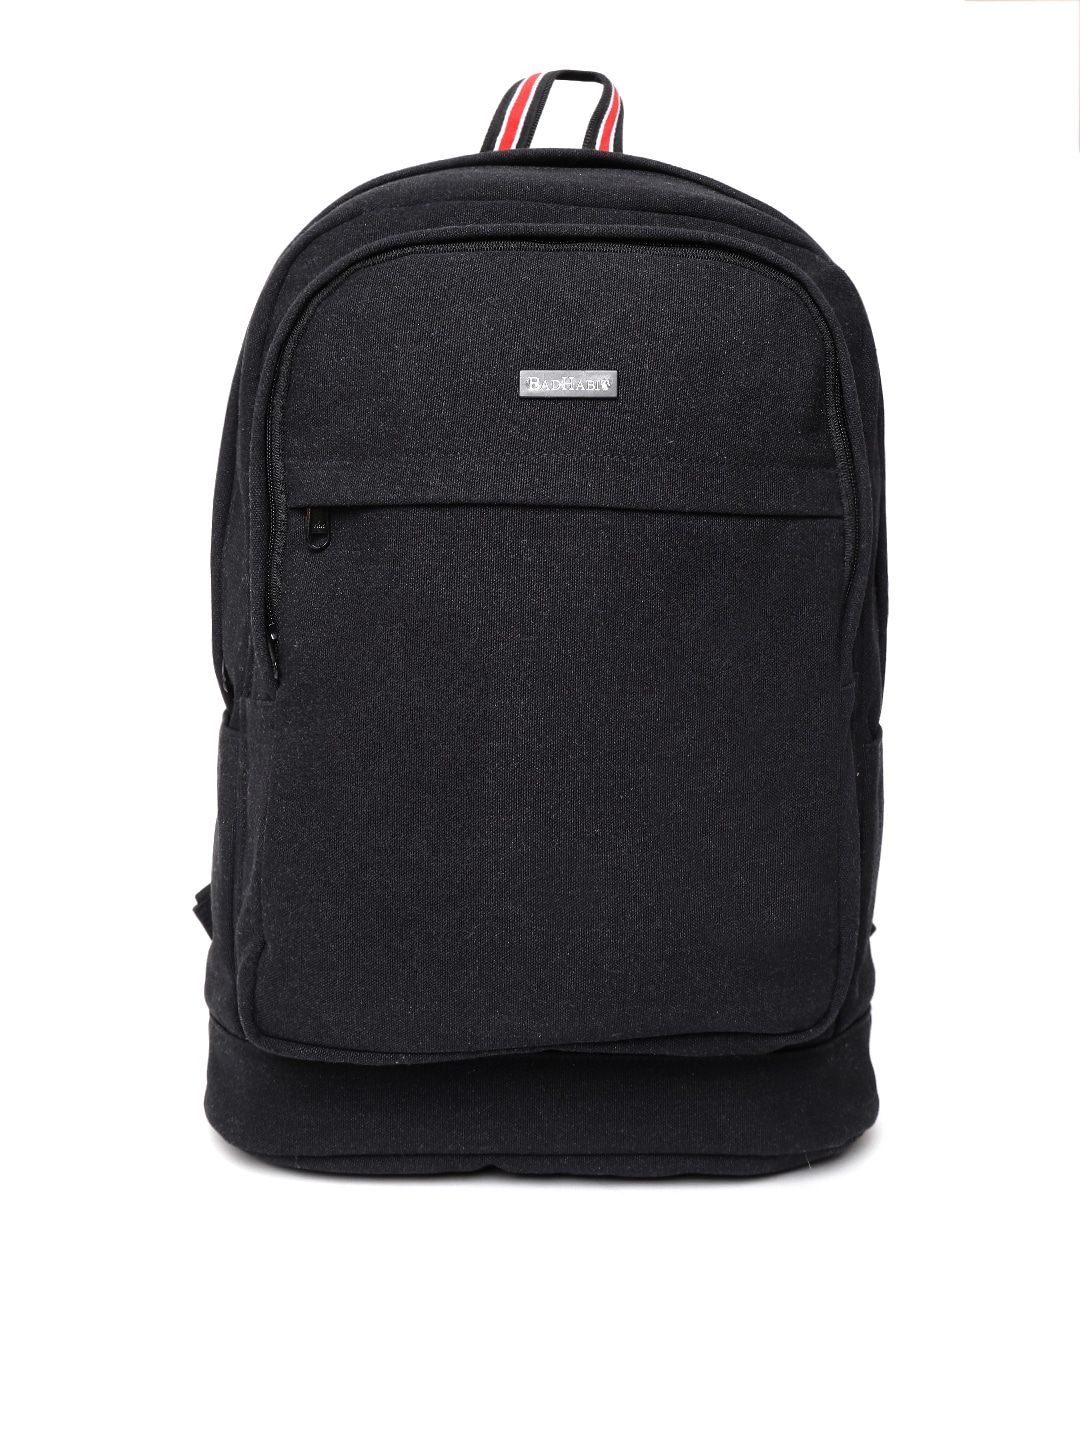 BAD HABIT Unisex Black Solid Laptop Backpack Price in India